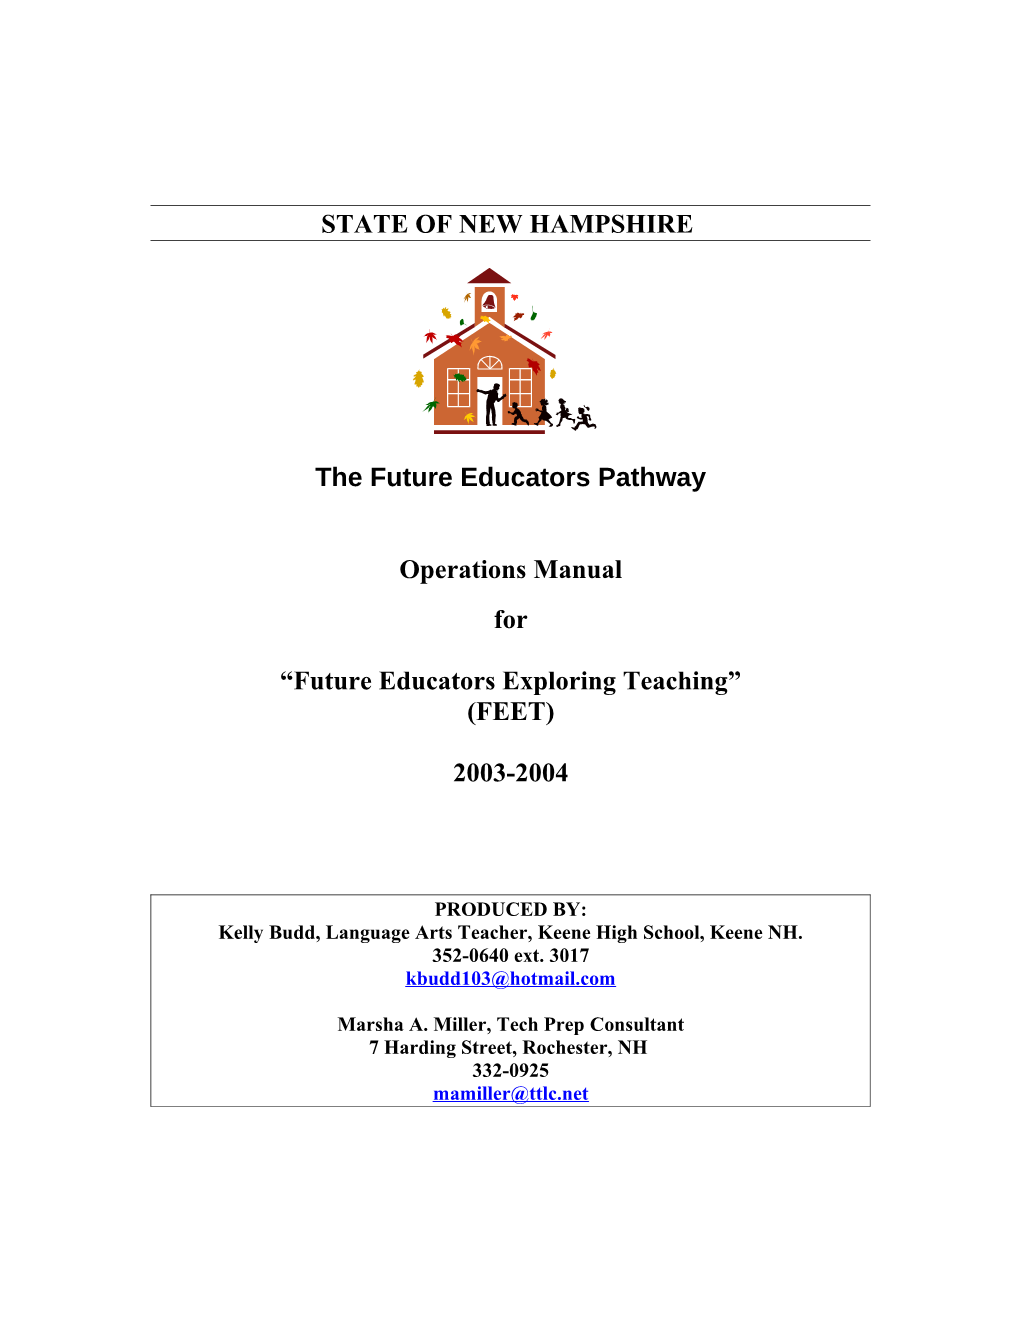 The Future Educators Pathway